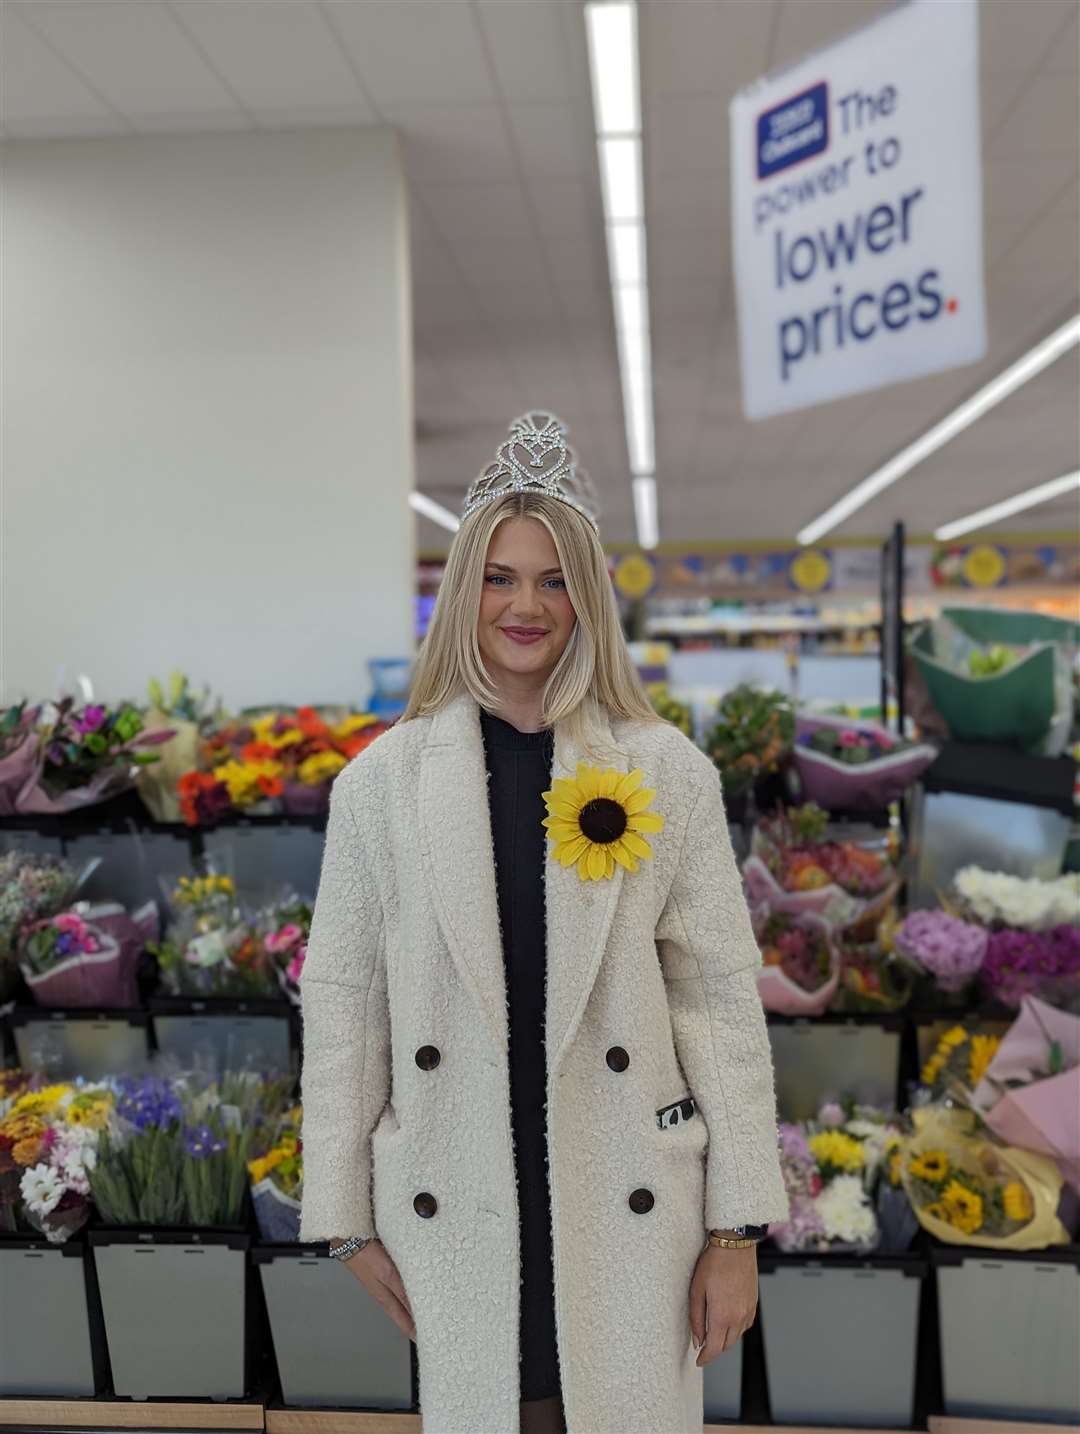 Miss Scotland wearing her crown in Tesco